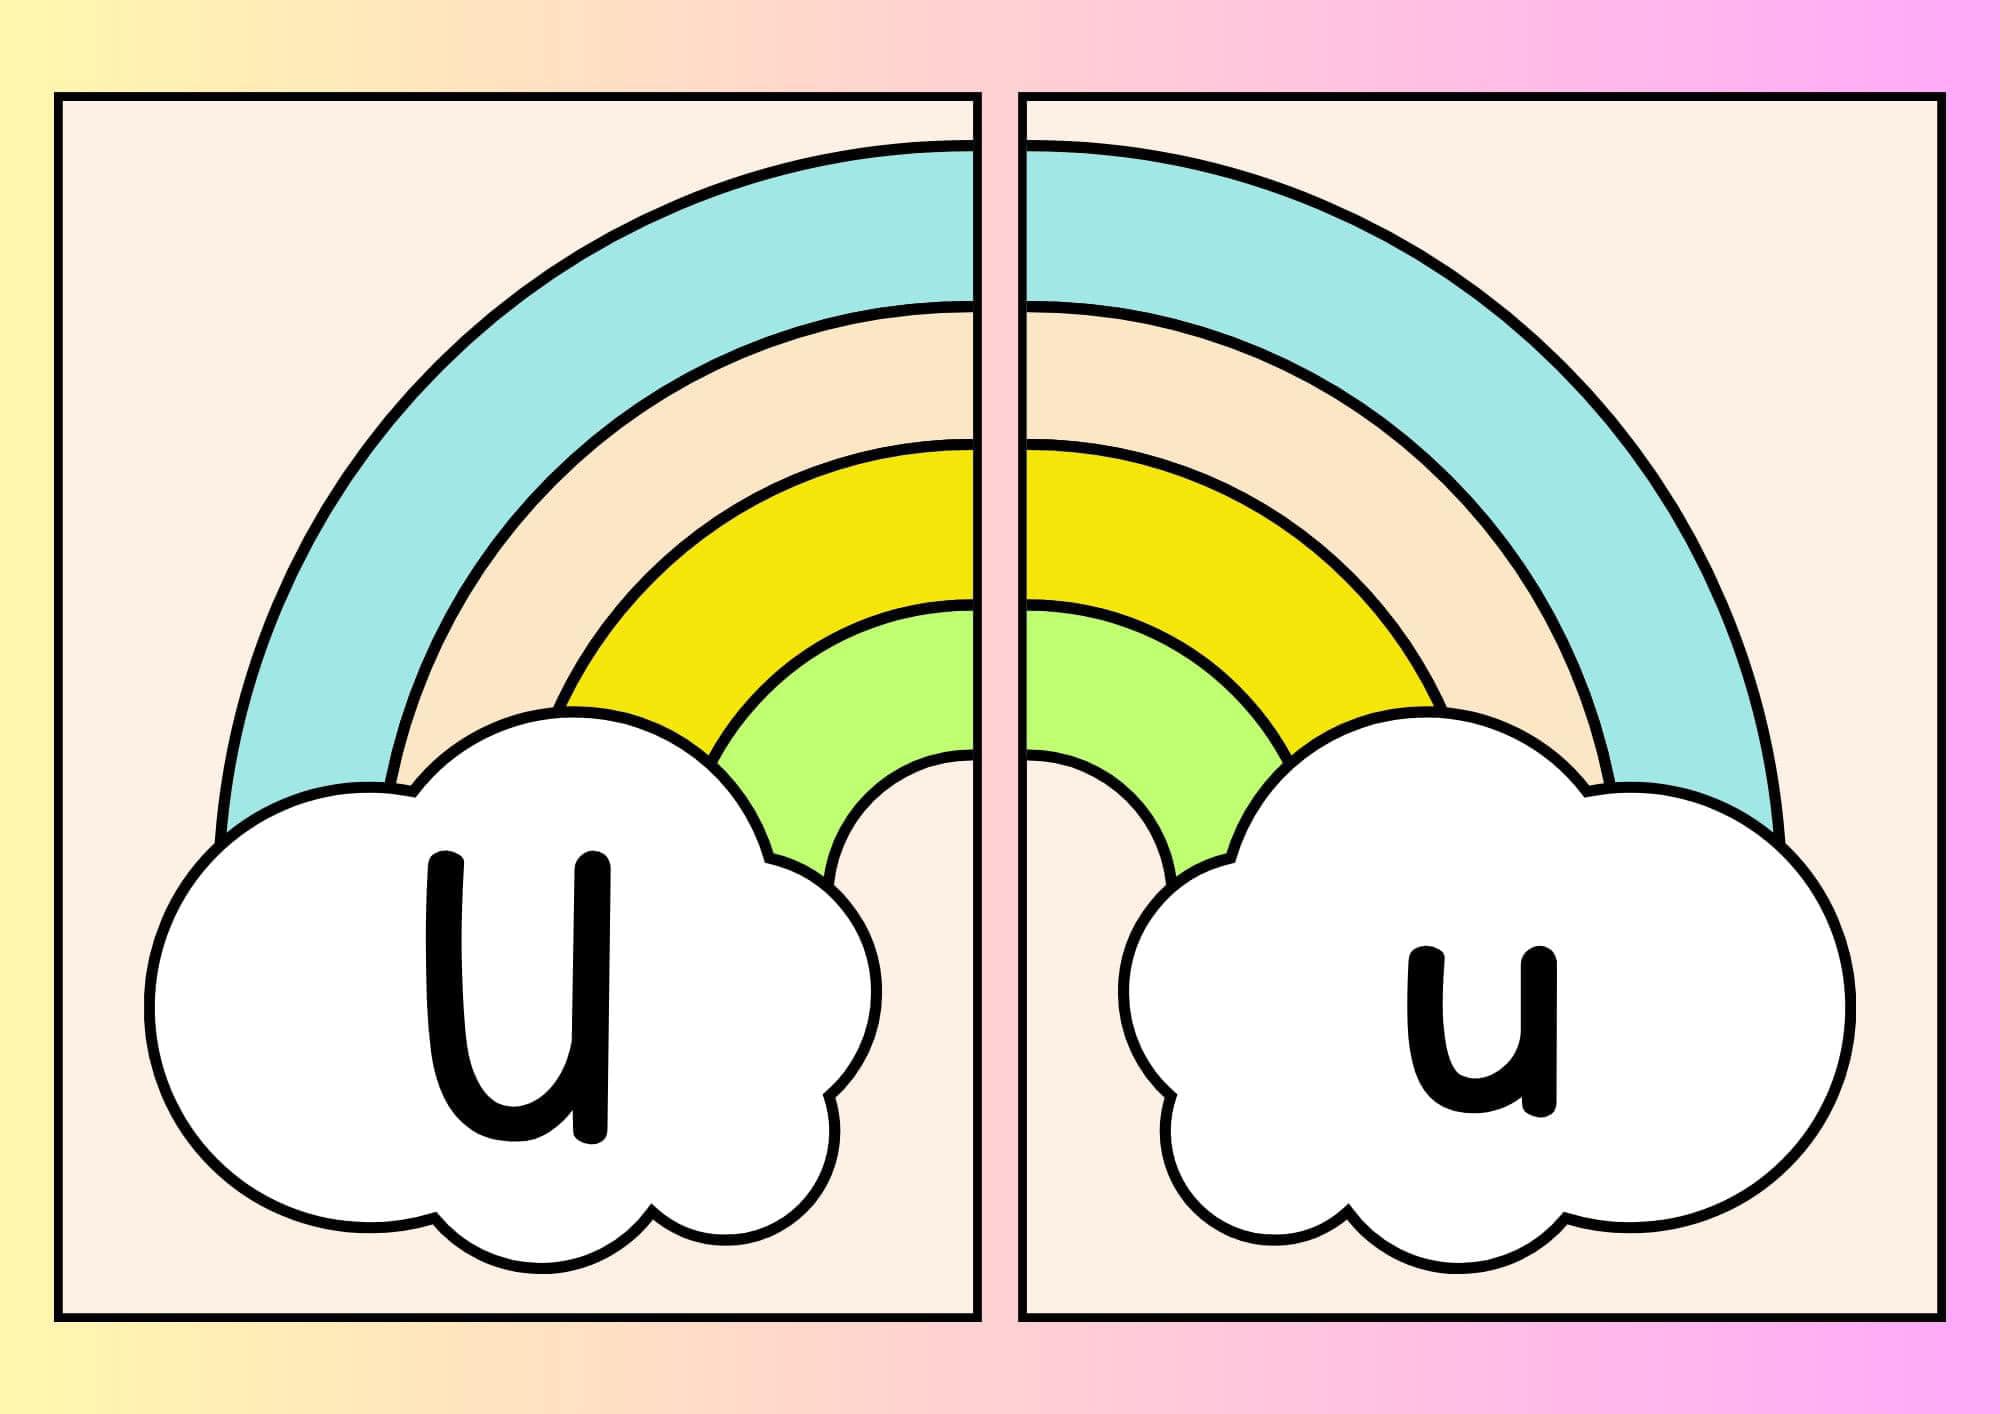 Alfabeto arco íris Uu